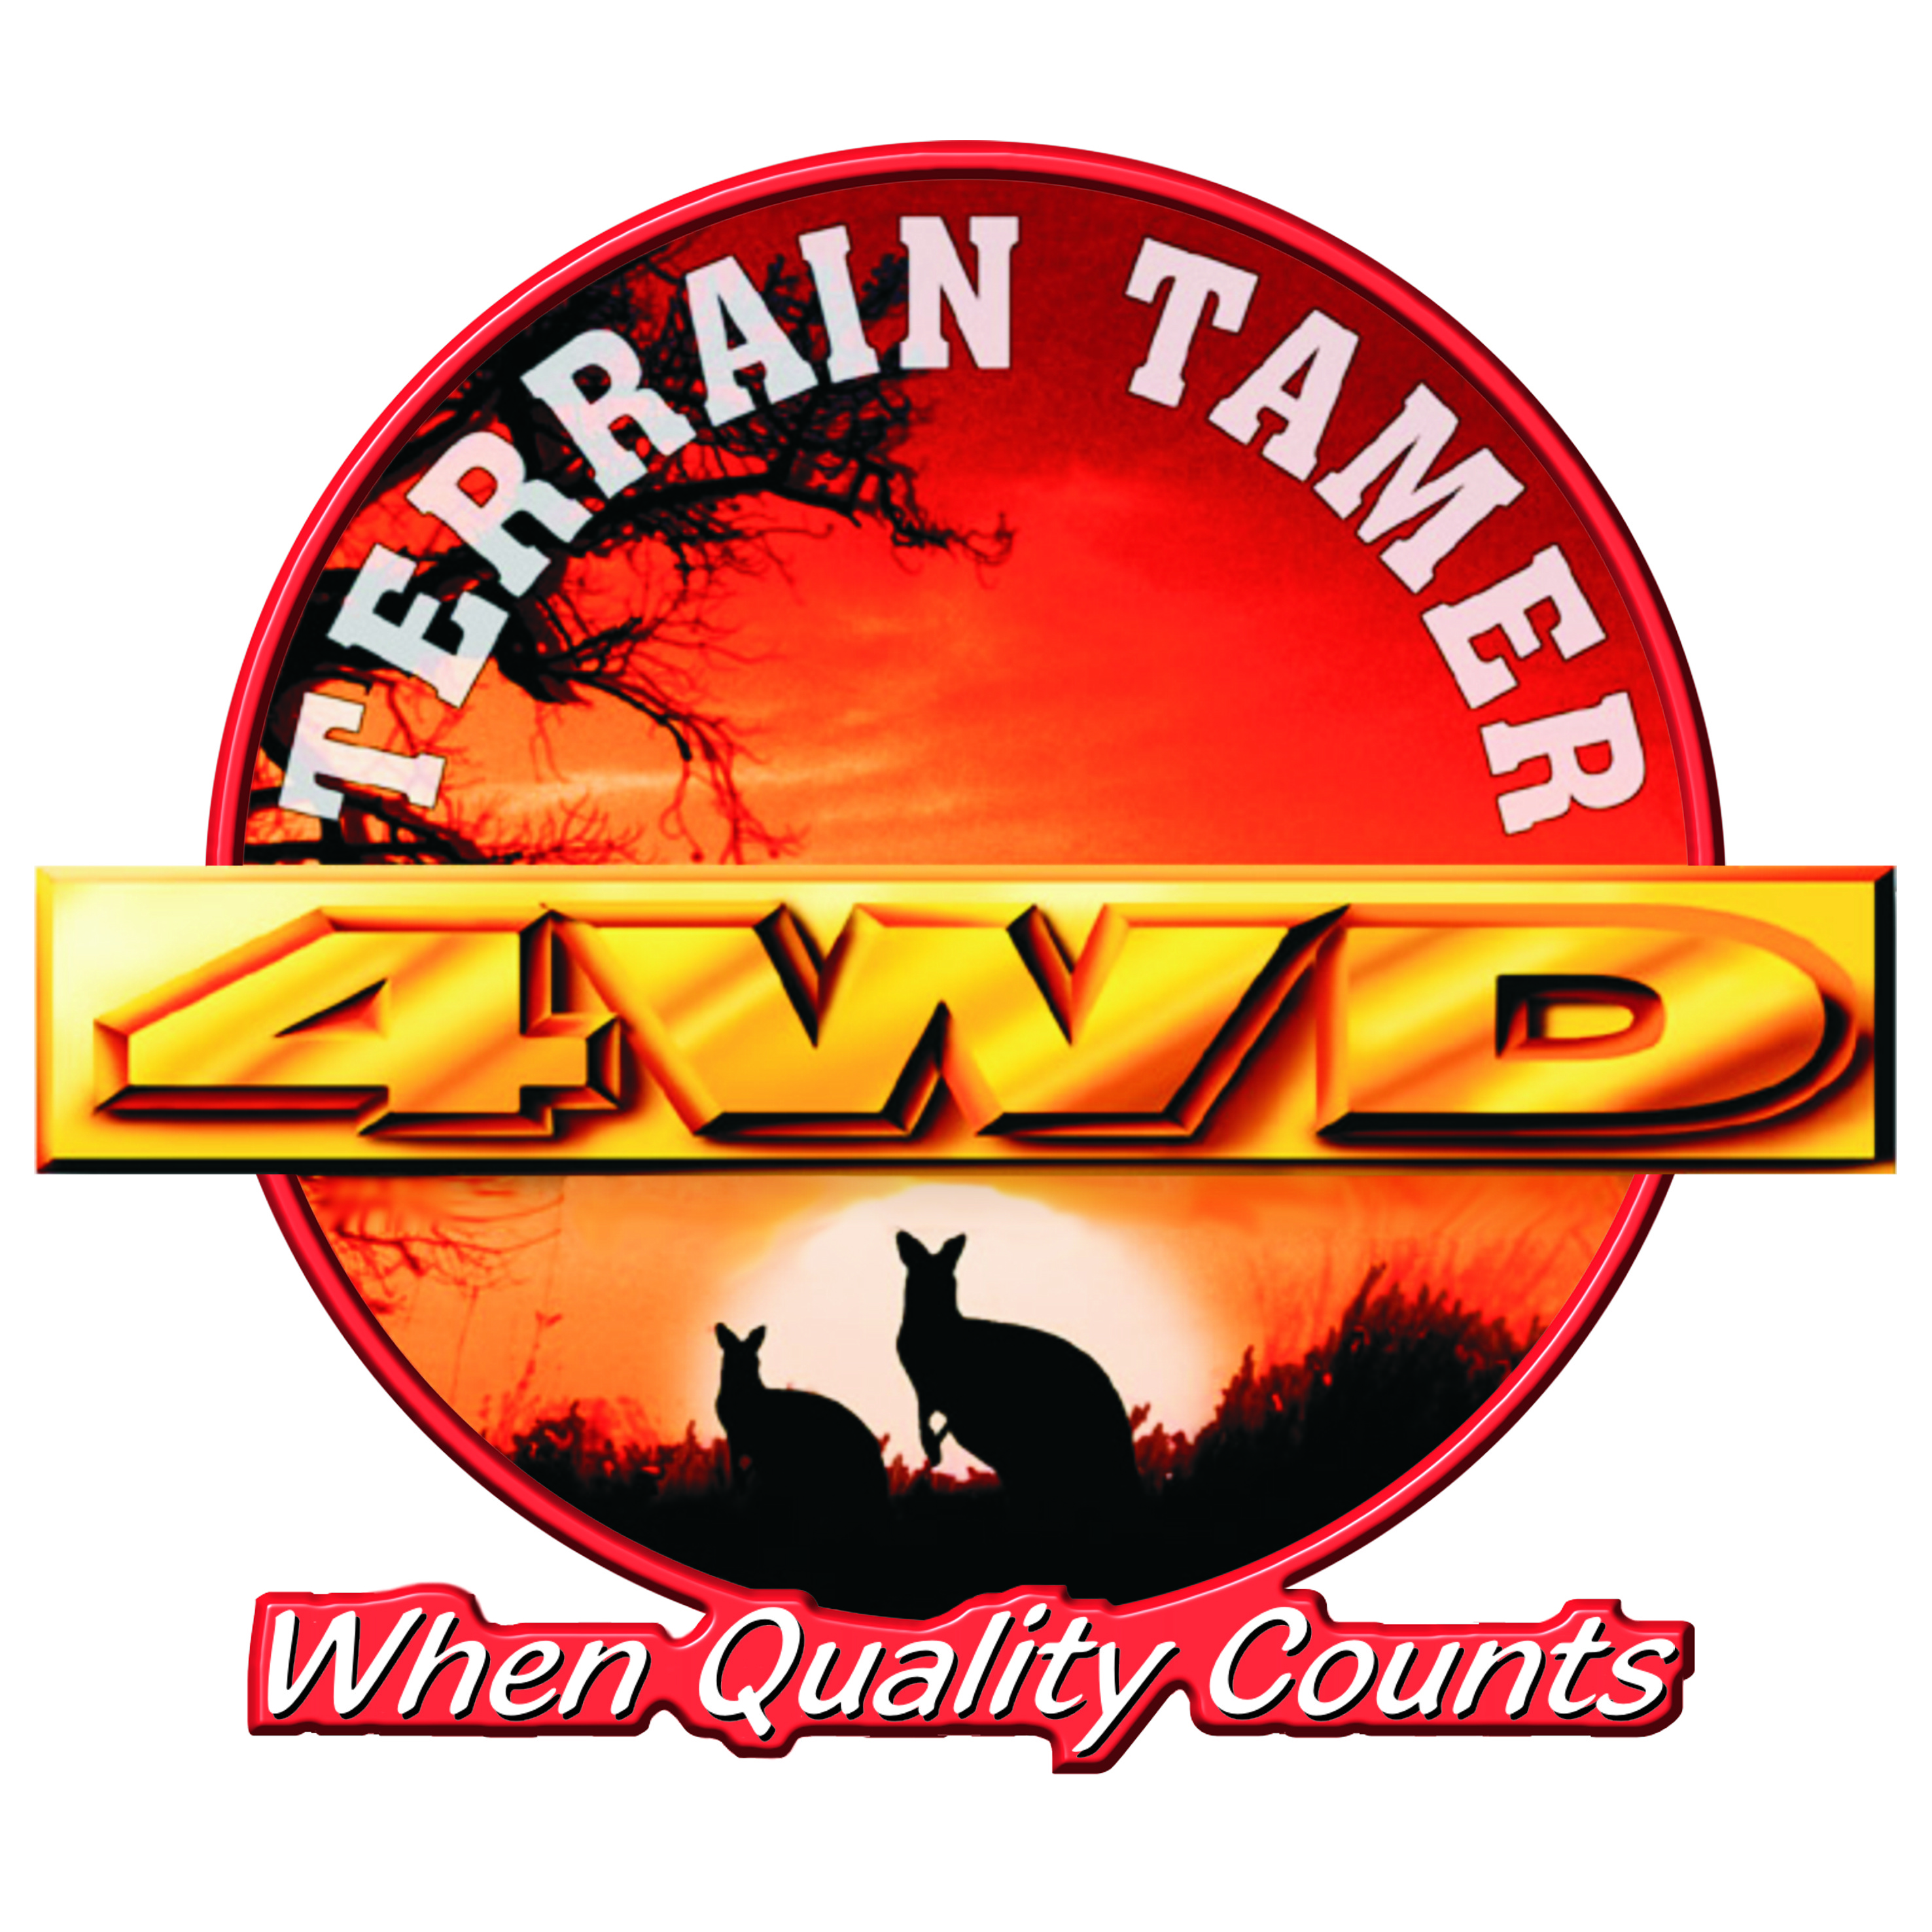 Terrain Tamer logo